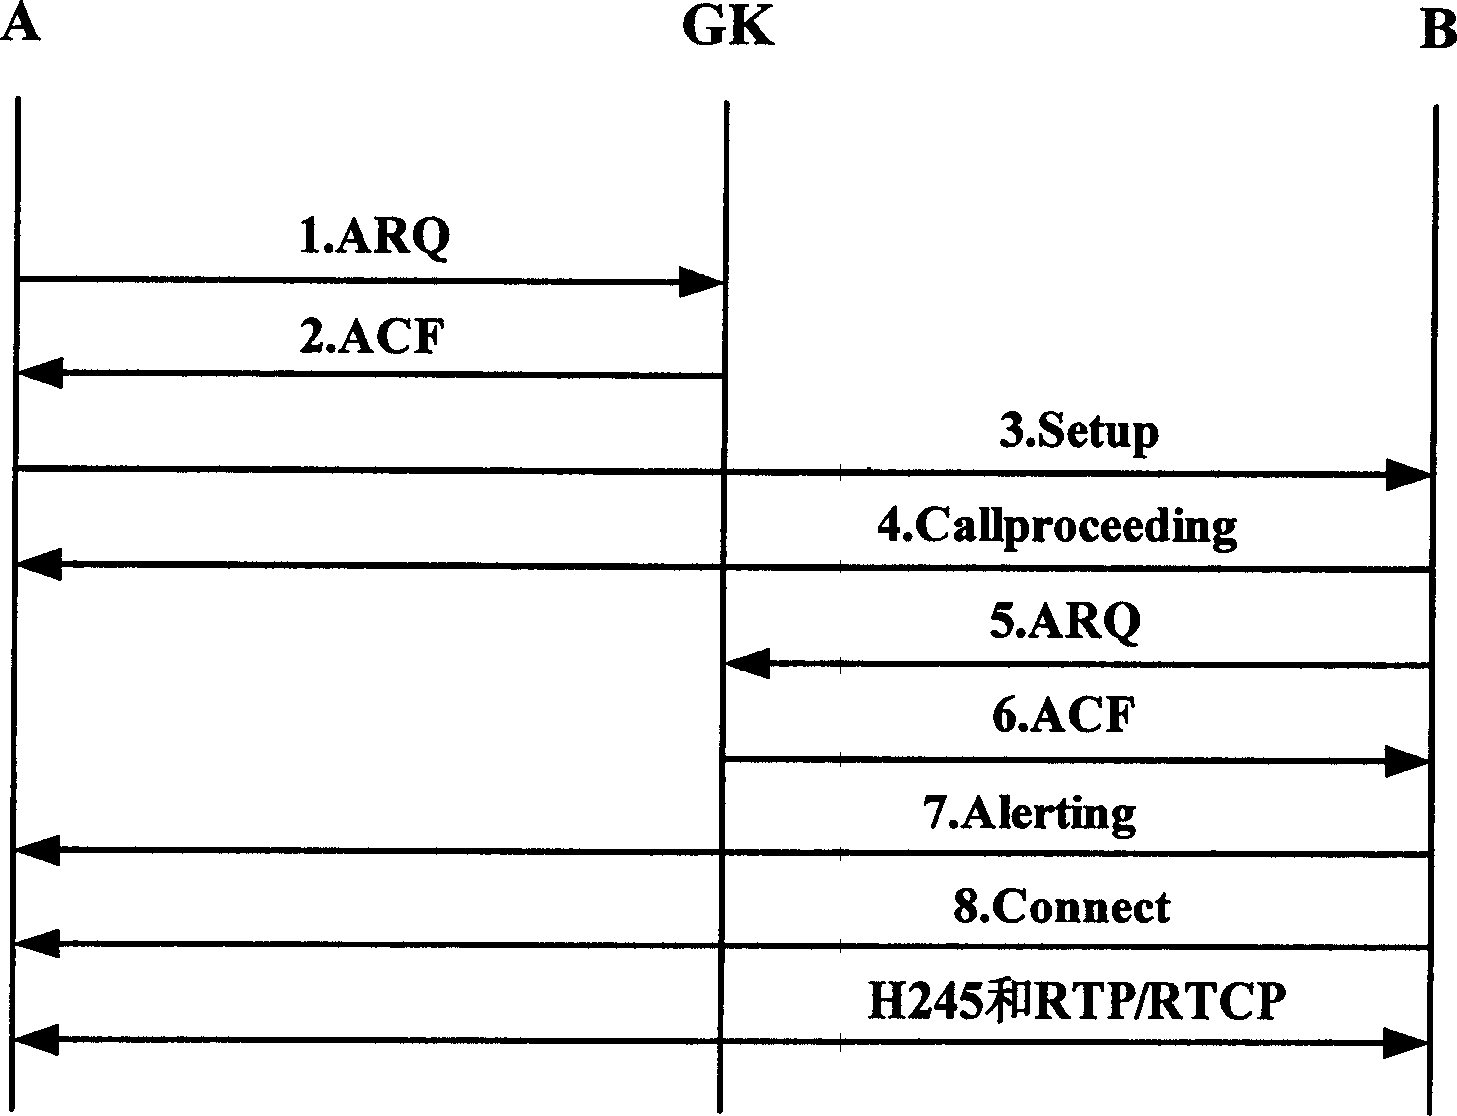 Cross-gate keeper call processing method